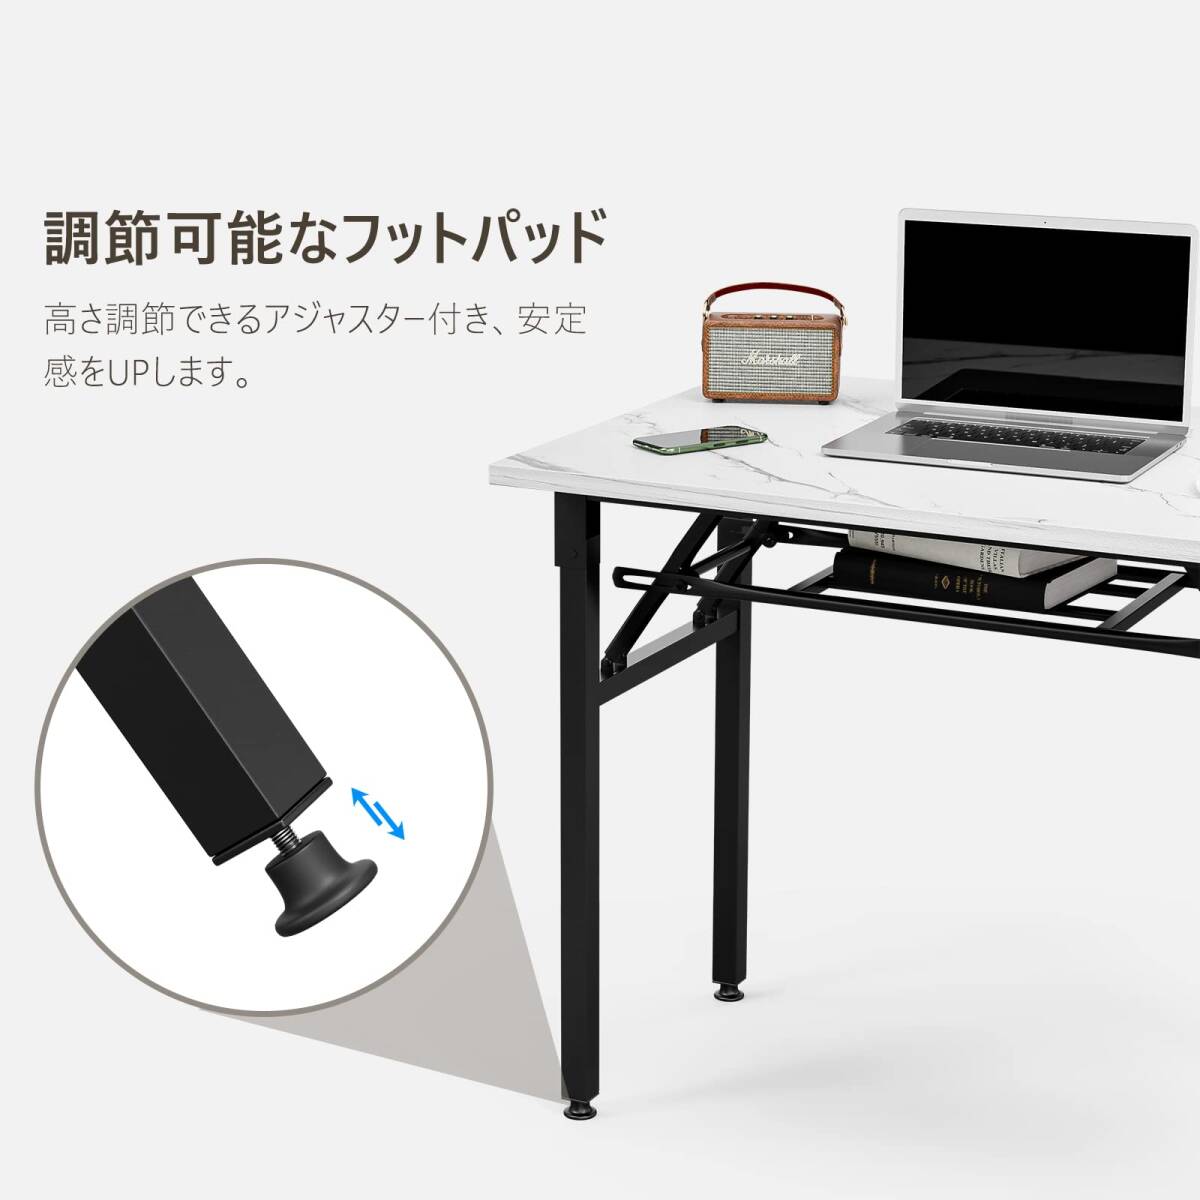 * складной стол мрамор рисунок сборка не необходимо розетка USB